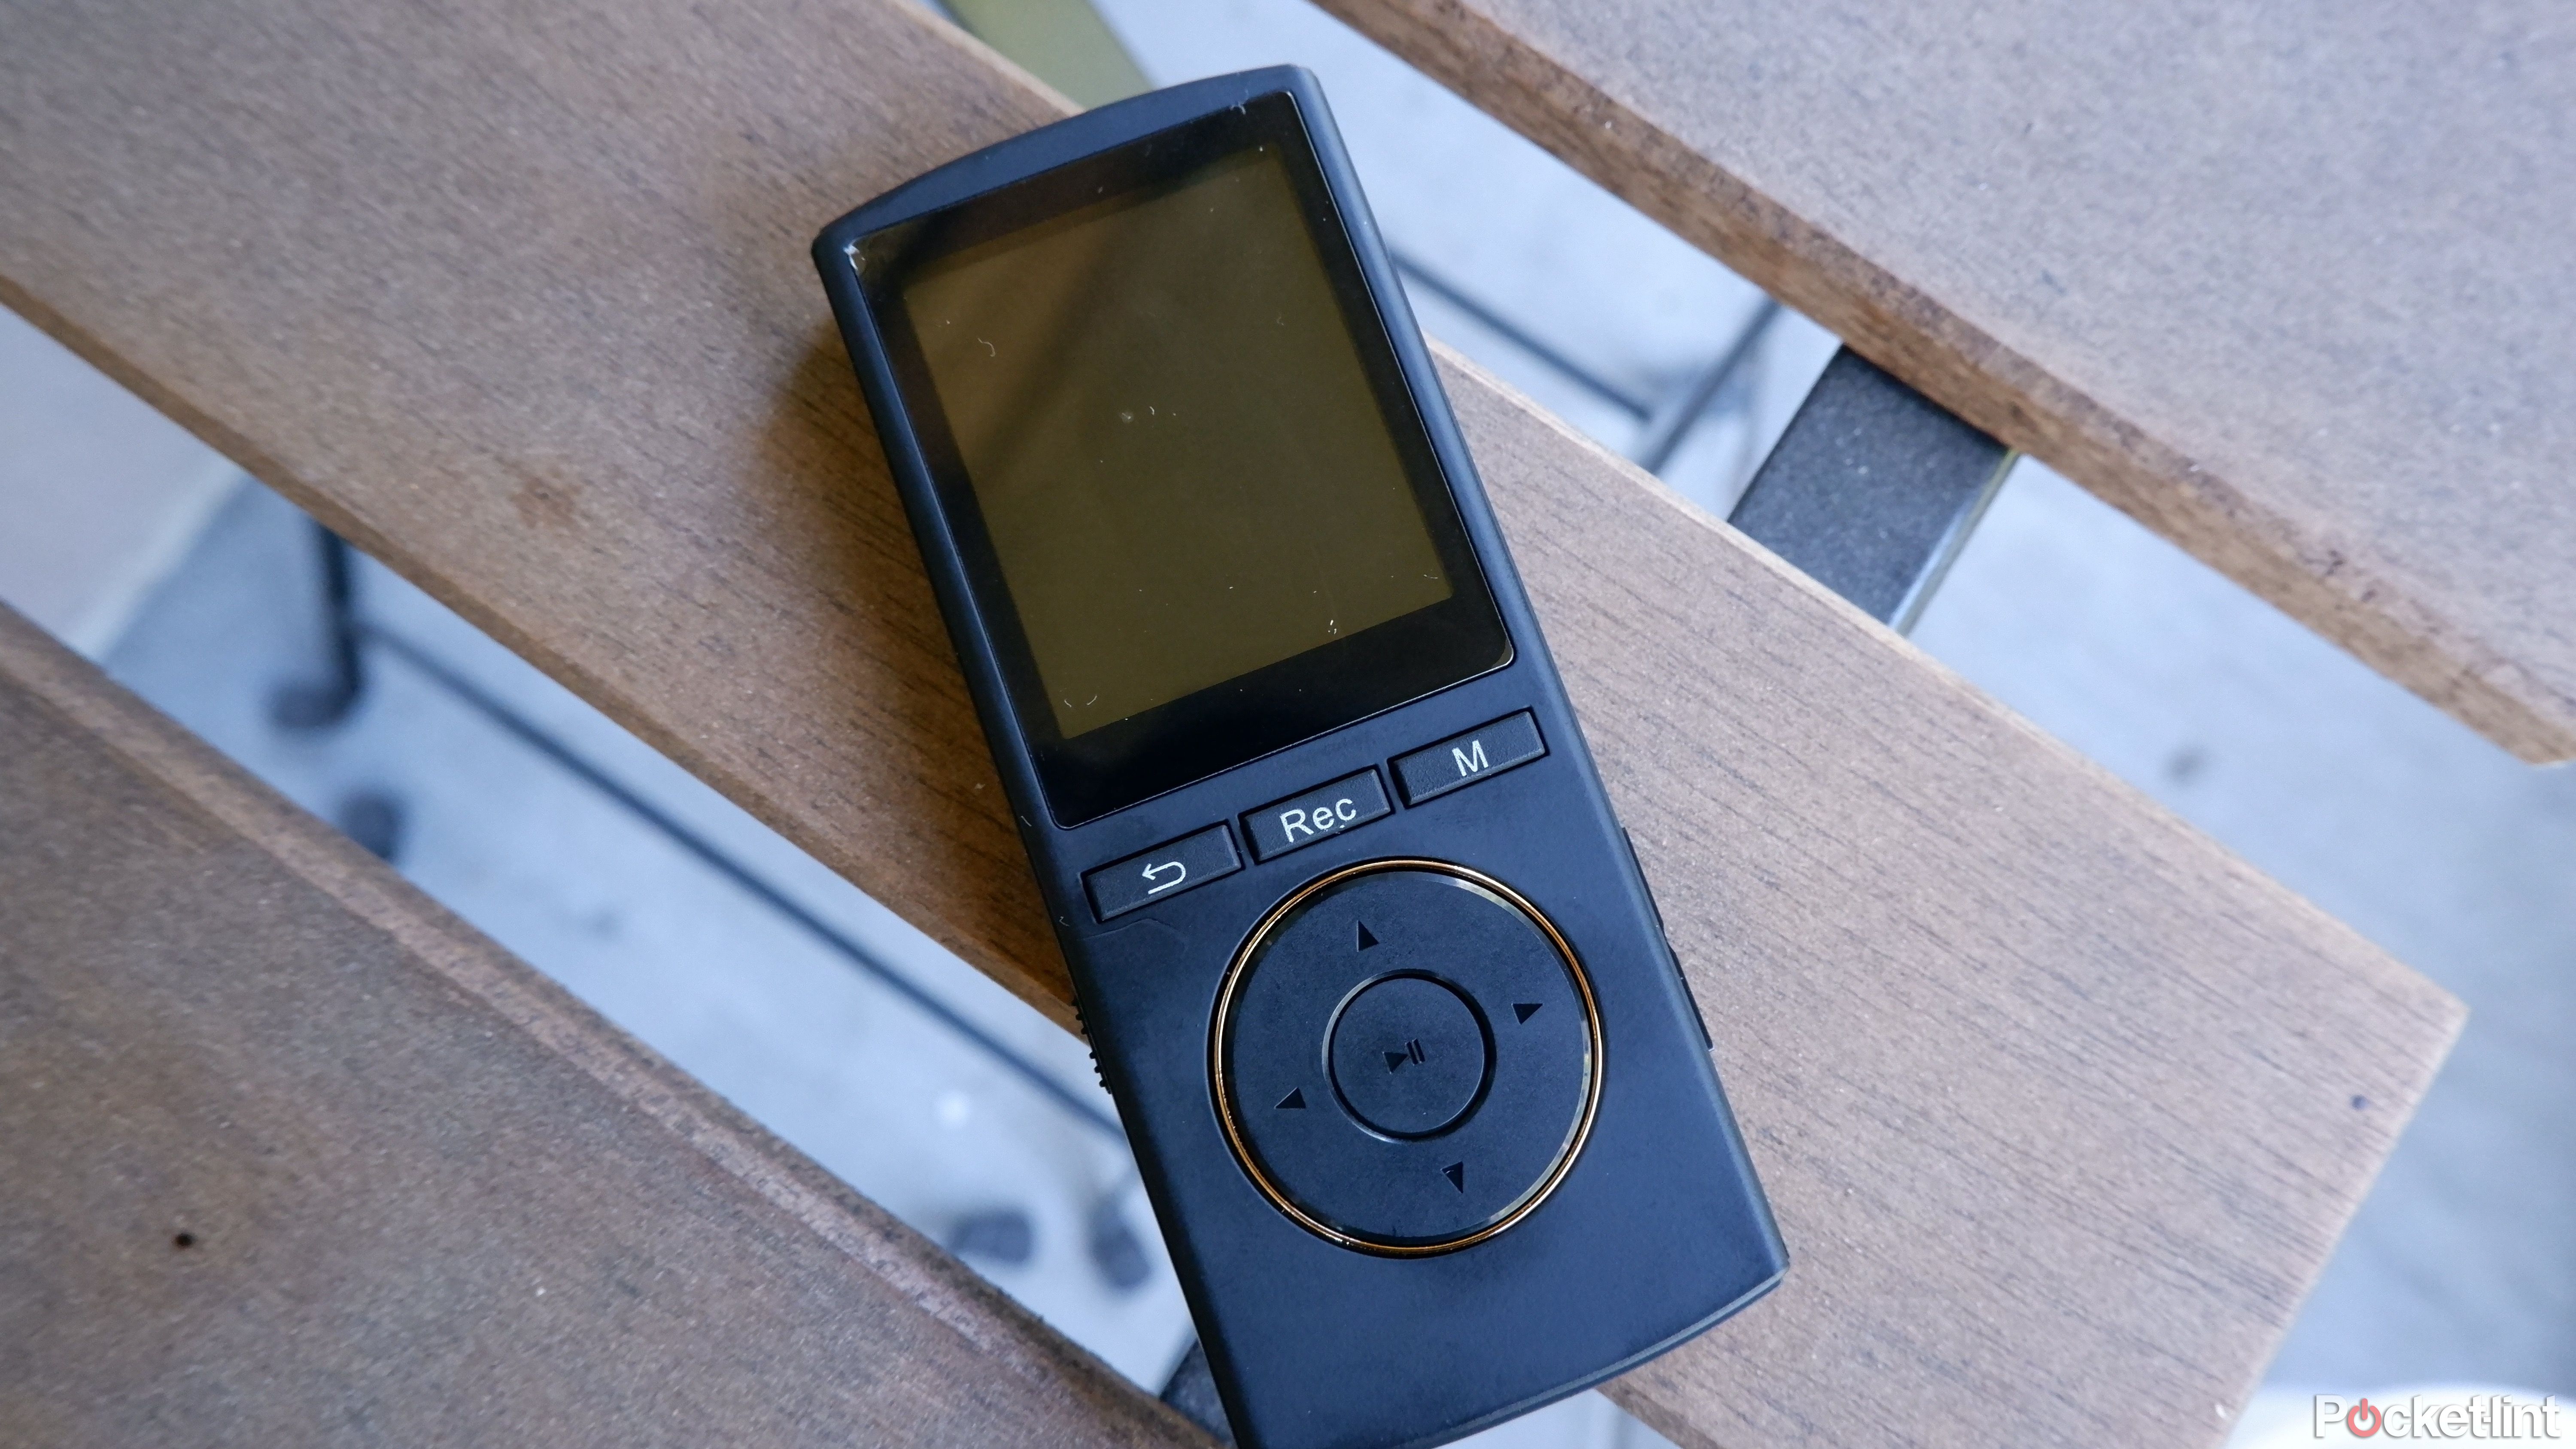 The Safuciiv MP3 player on a patio table